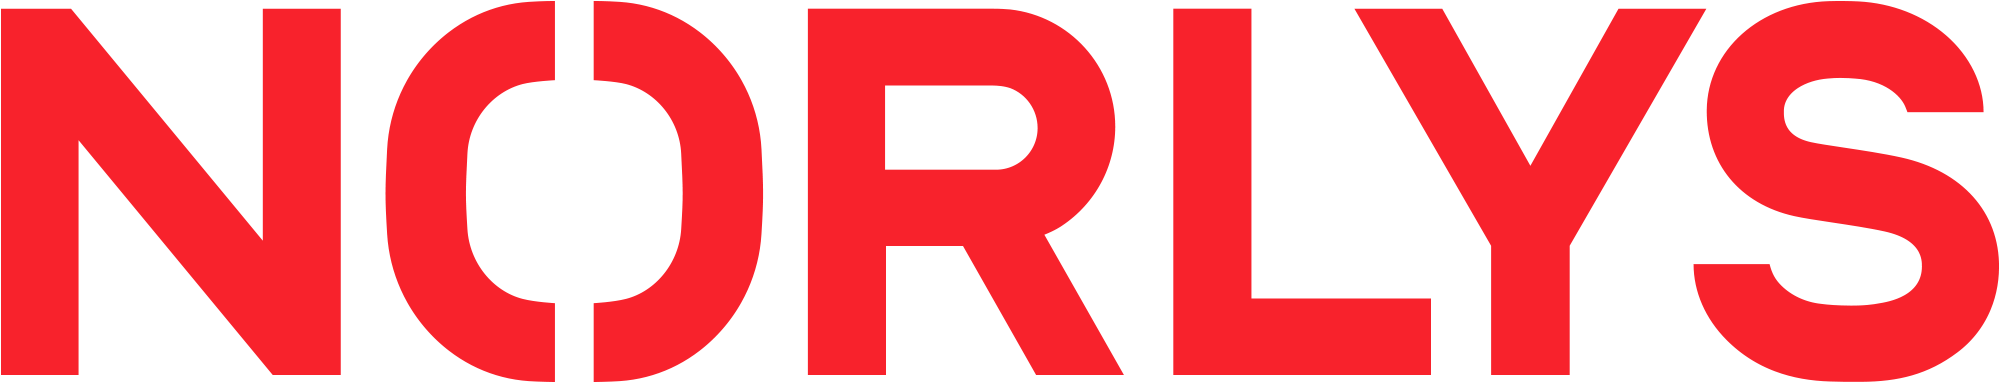 Norlys logotype rgb